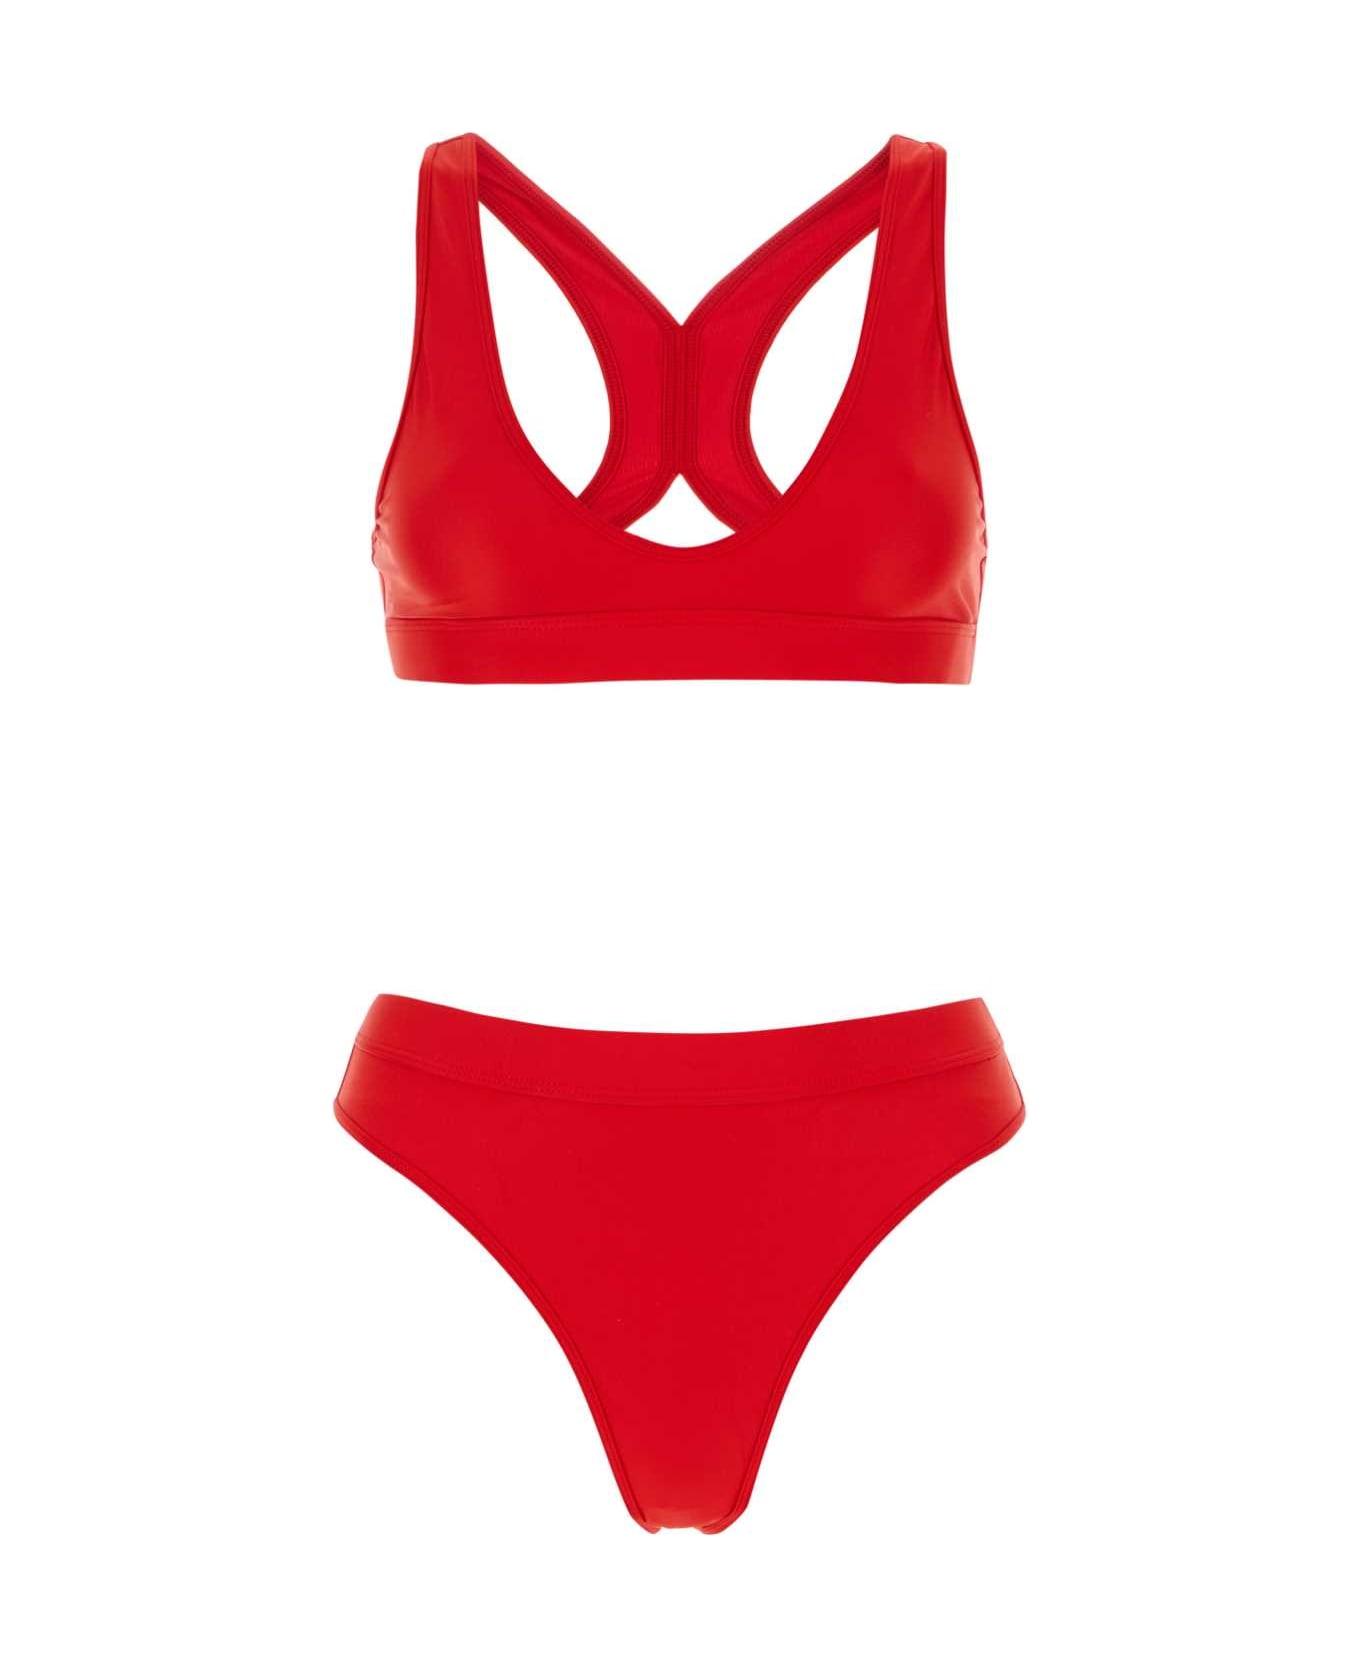 Ami Alexandre Mattiussi Red Stretch Nylon Bikini - 681